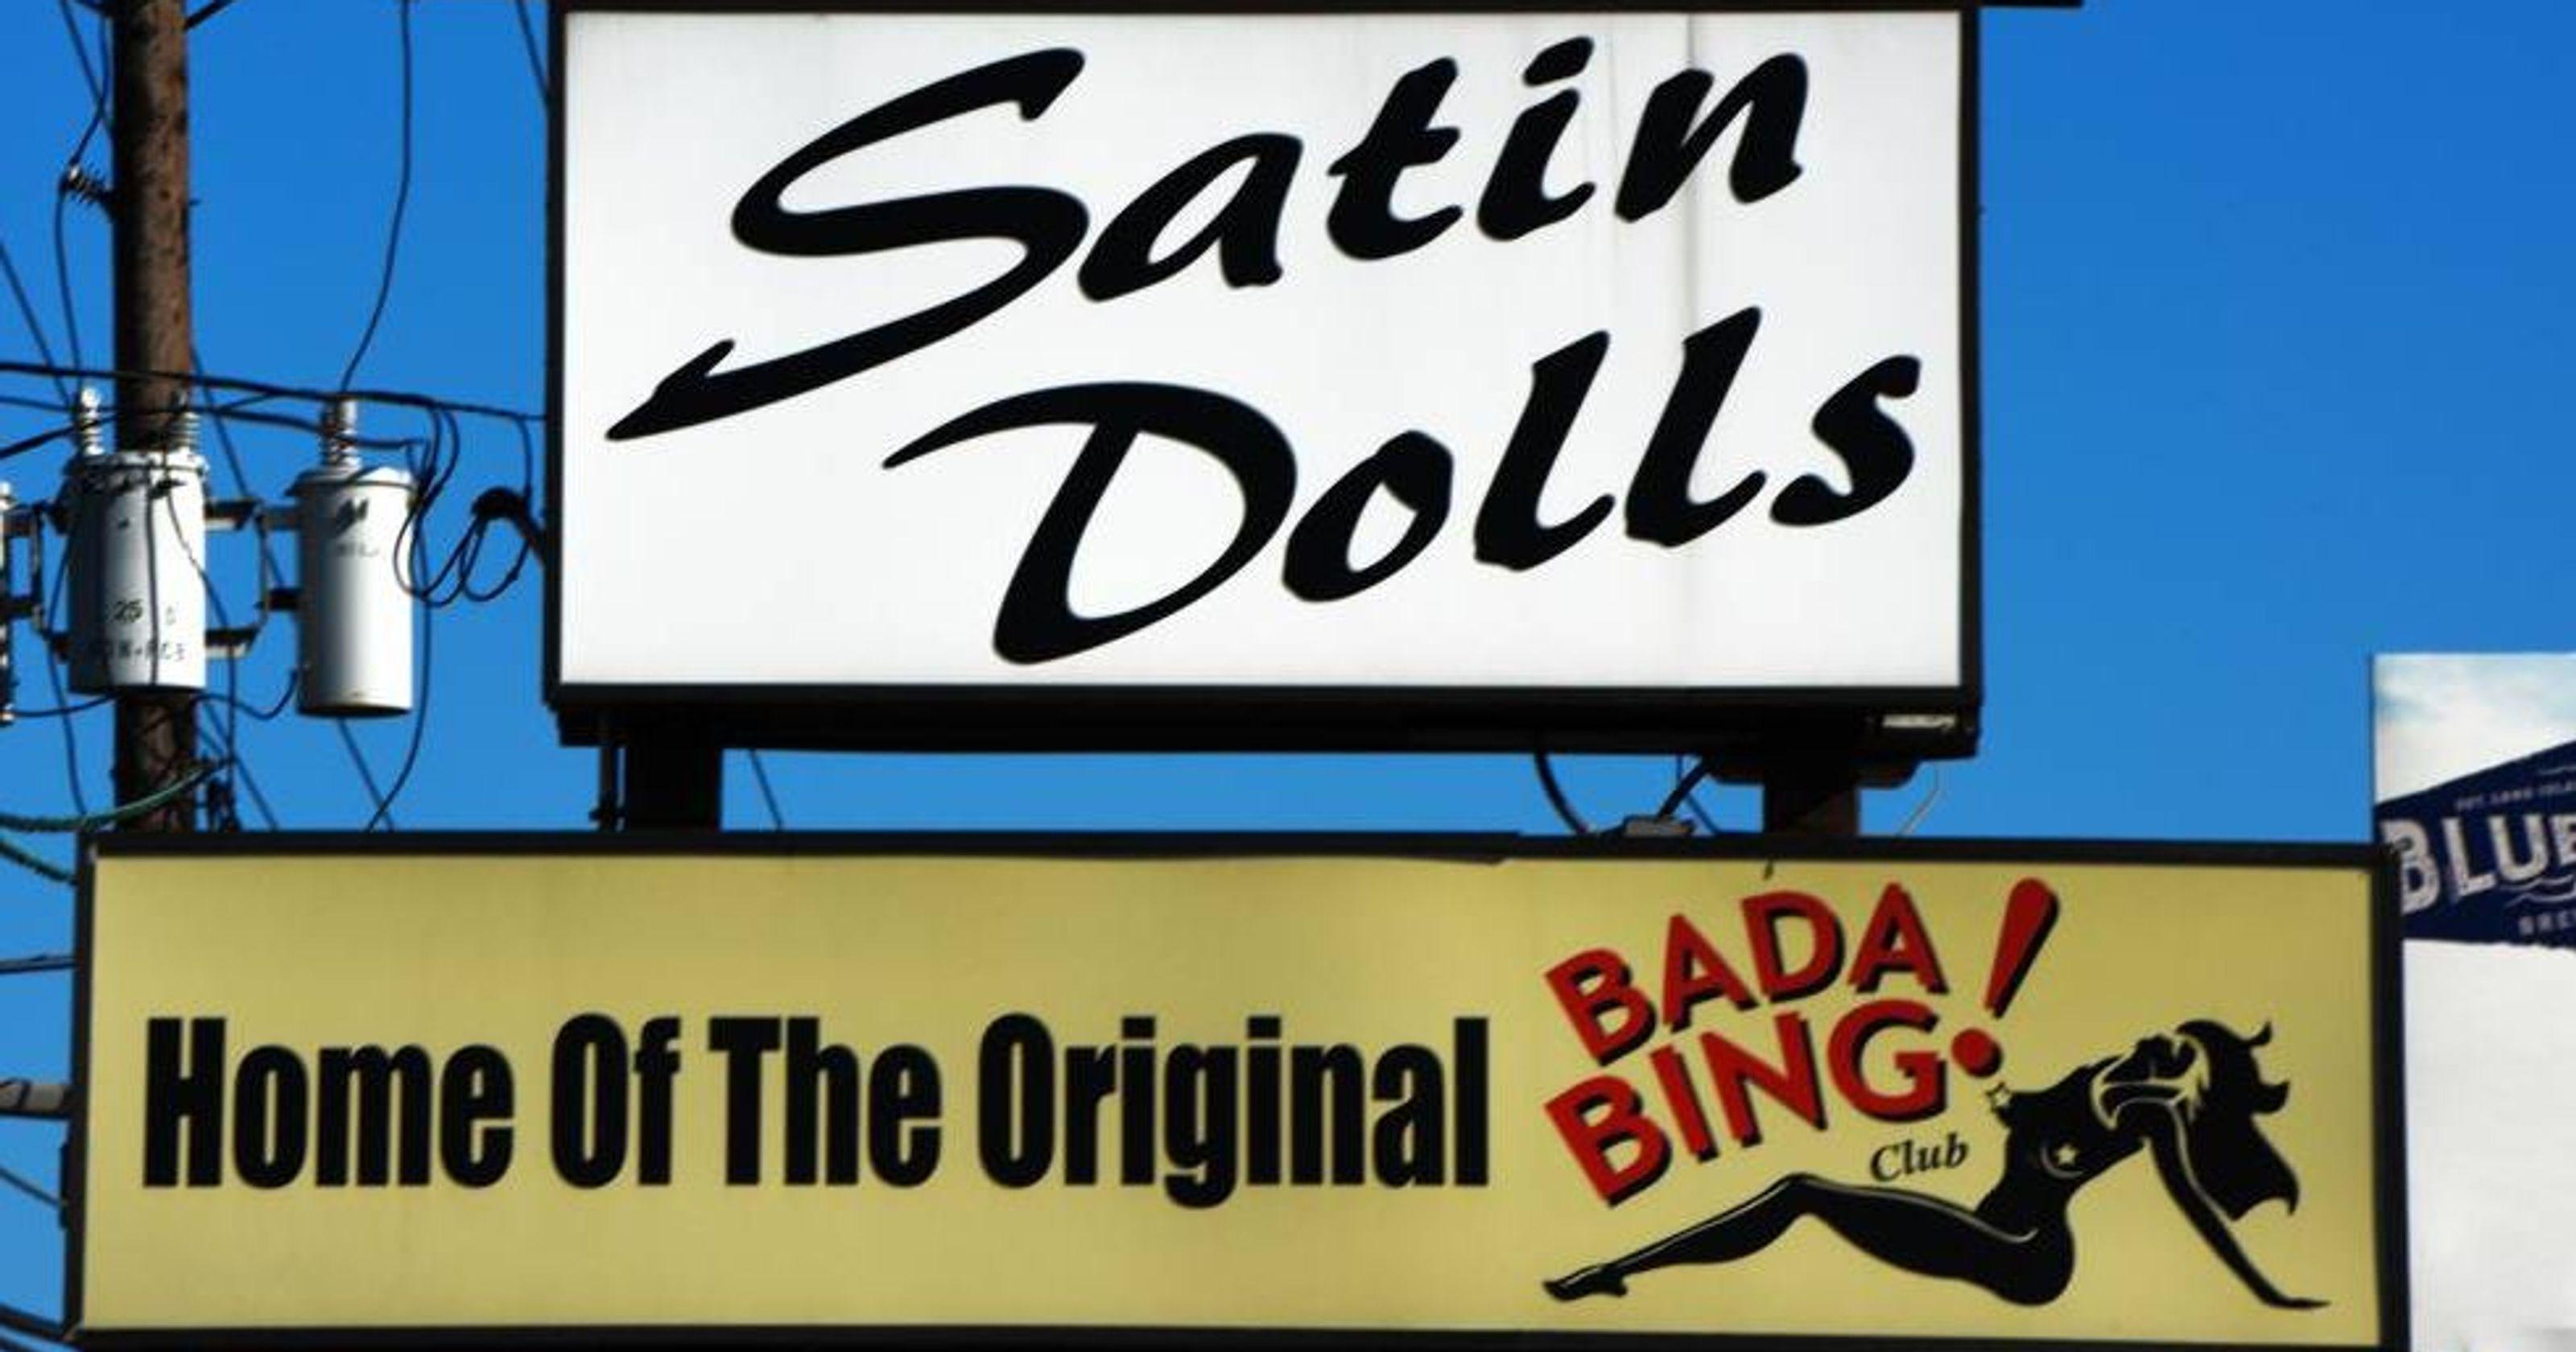 Bada Bing Logo - Satin Dolls, 'Sopranos' Bada Bing!, ordered to give up liquor license